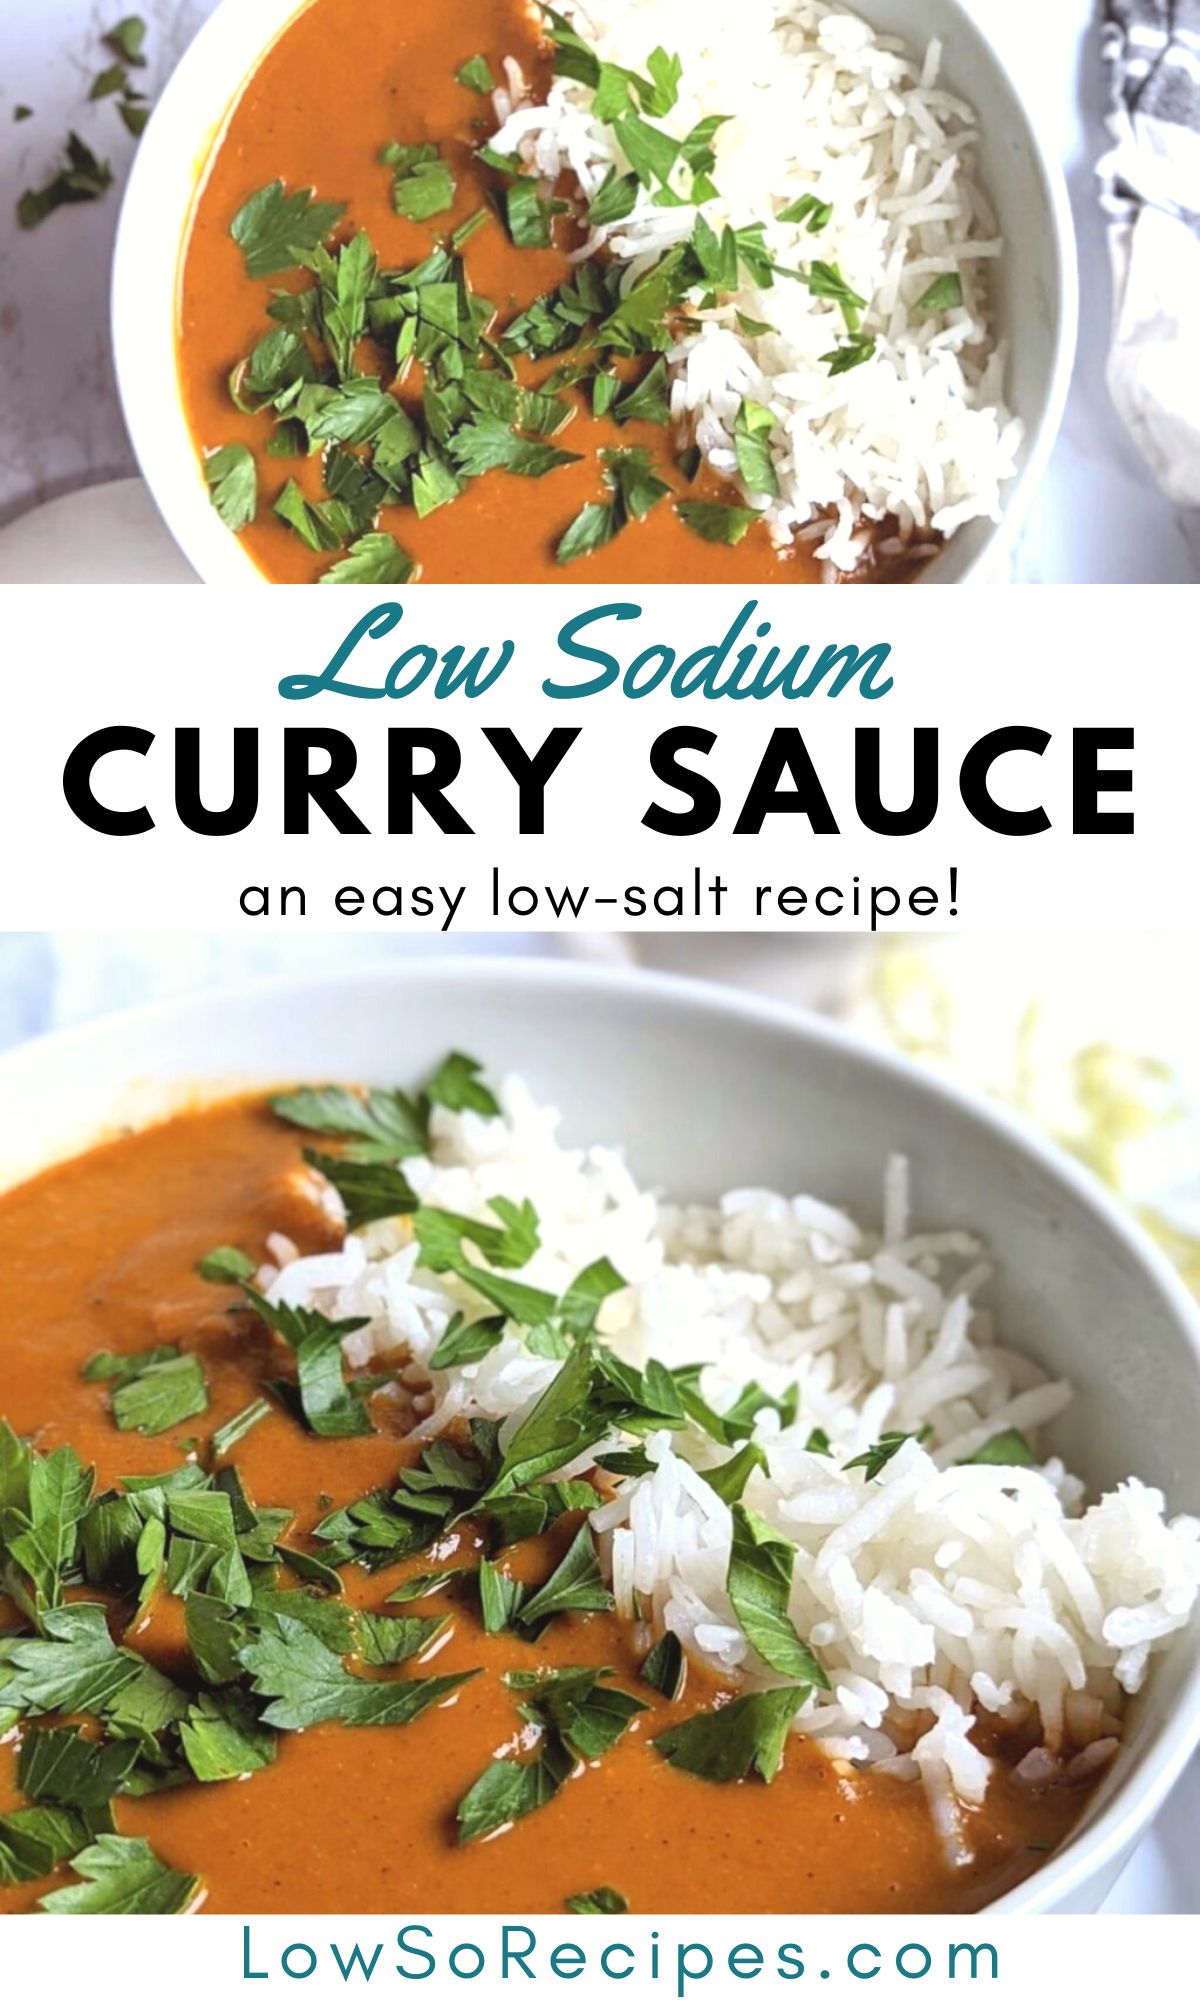 low sodium curry sauce recipe no salt added sauces heart healthy curry sauce recipe